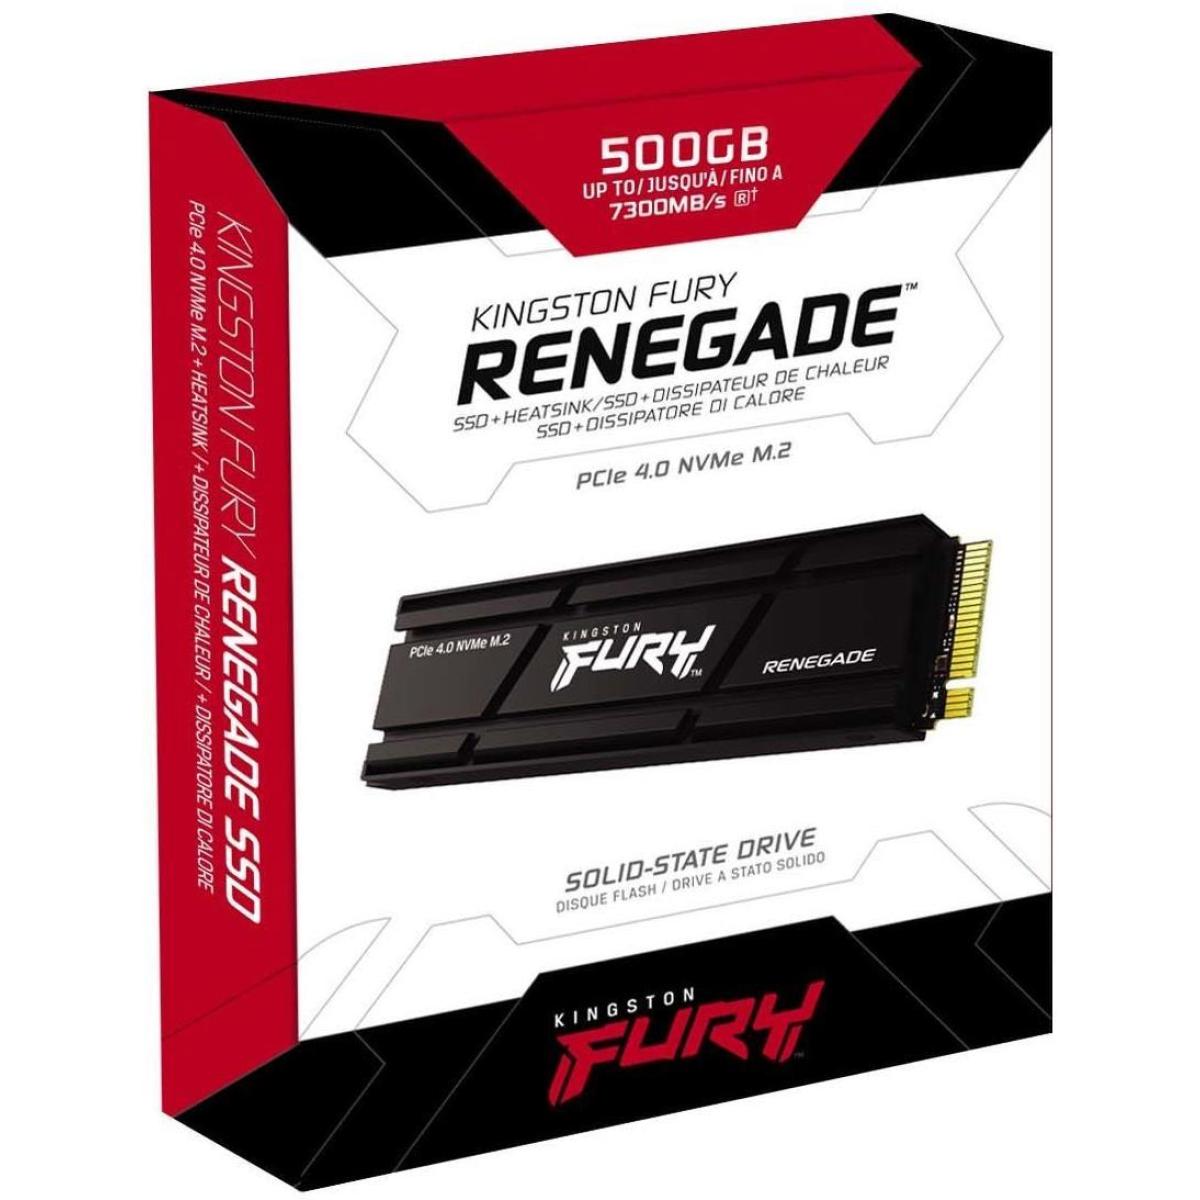 Kingston FURY Renegade 500GB PCIe 4.0 NVMe M.2 SSD up to 7,300MBs w Heatsink & PS5™ Ready